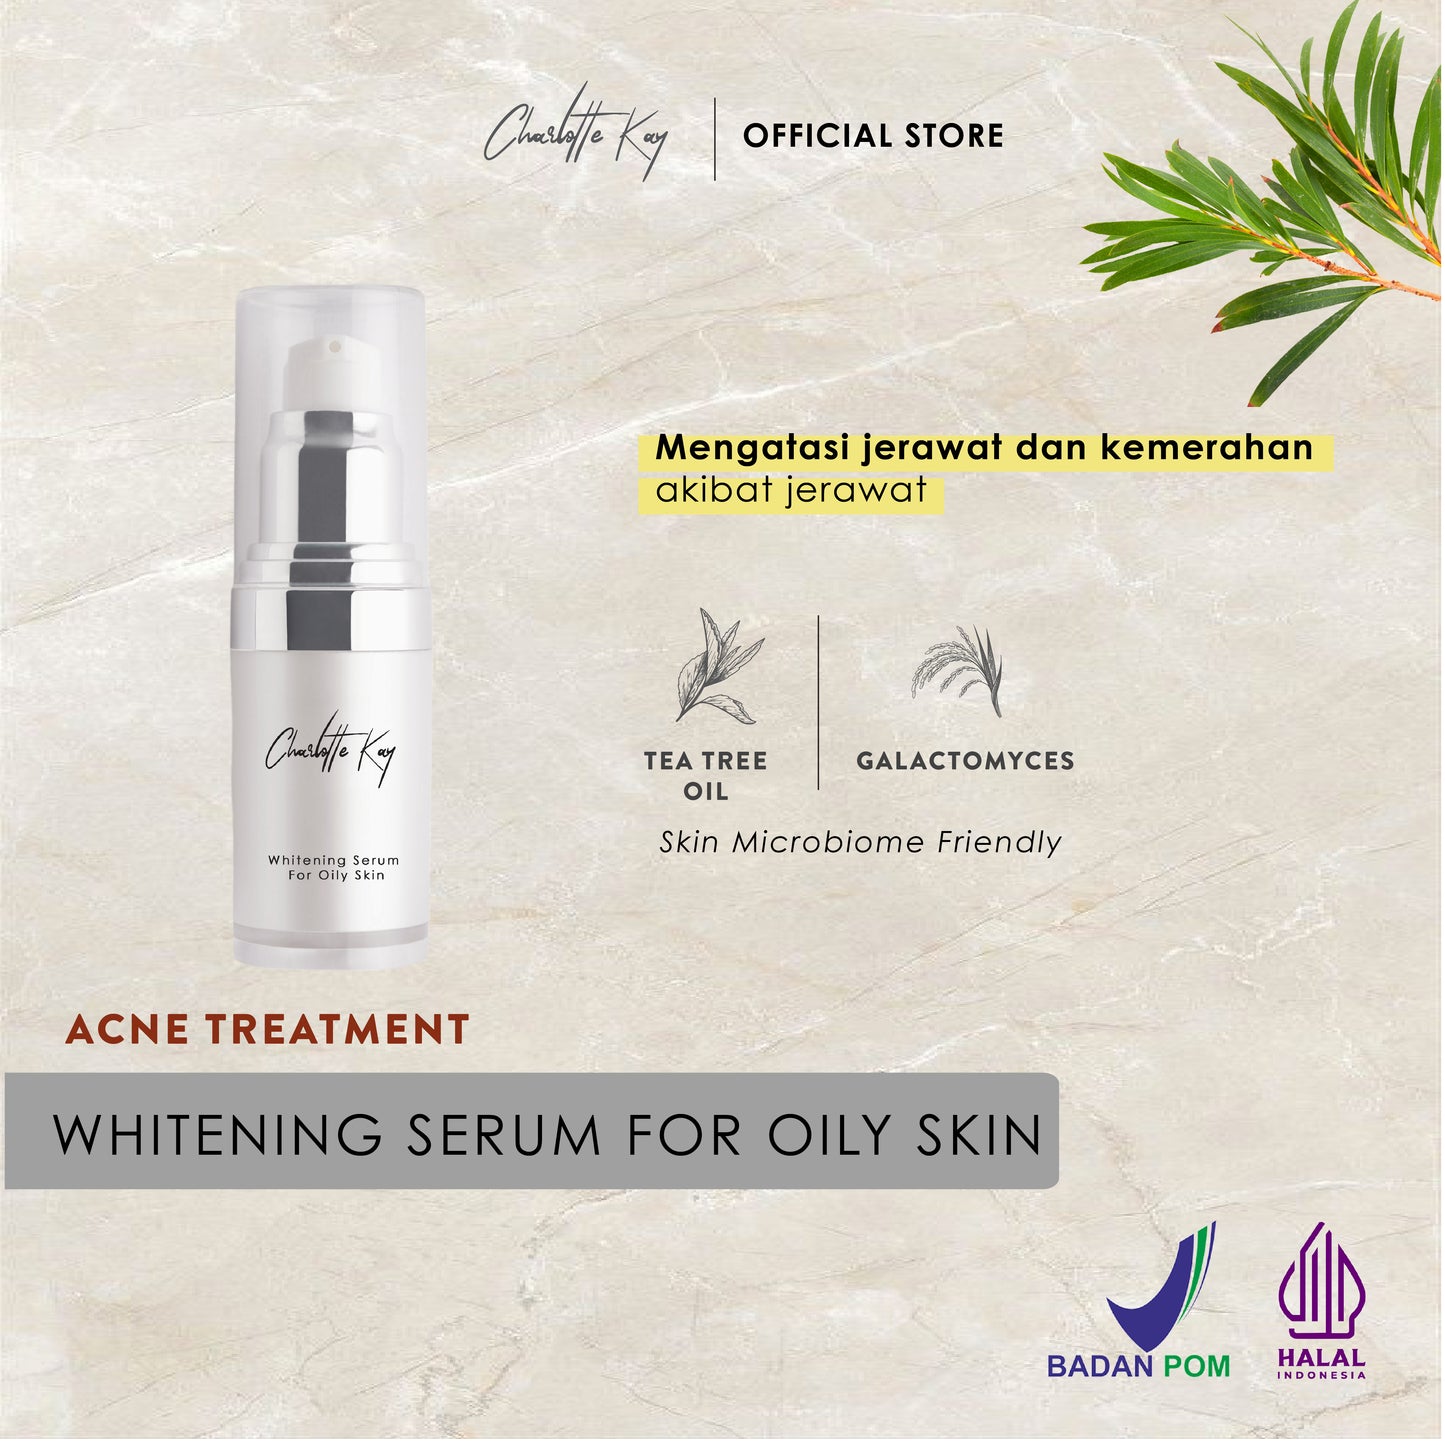 (Acne Treatment) Whitening Serum for Oily Skin - with Tea Tree Oil